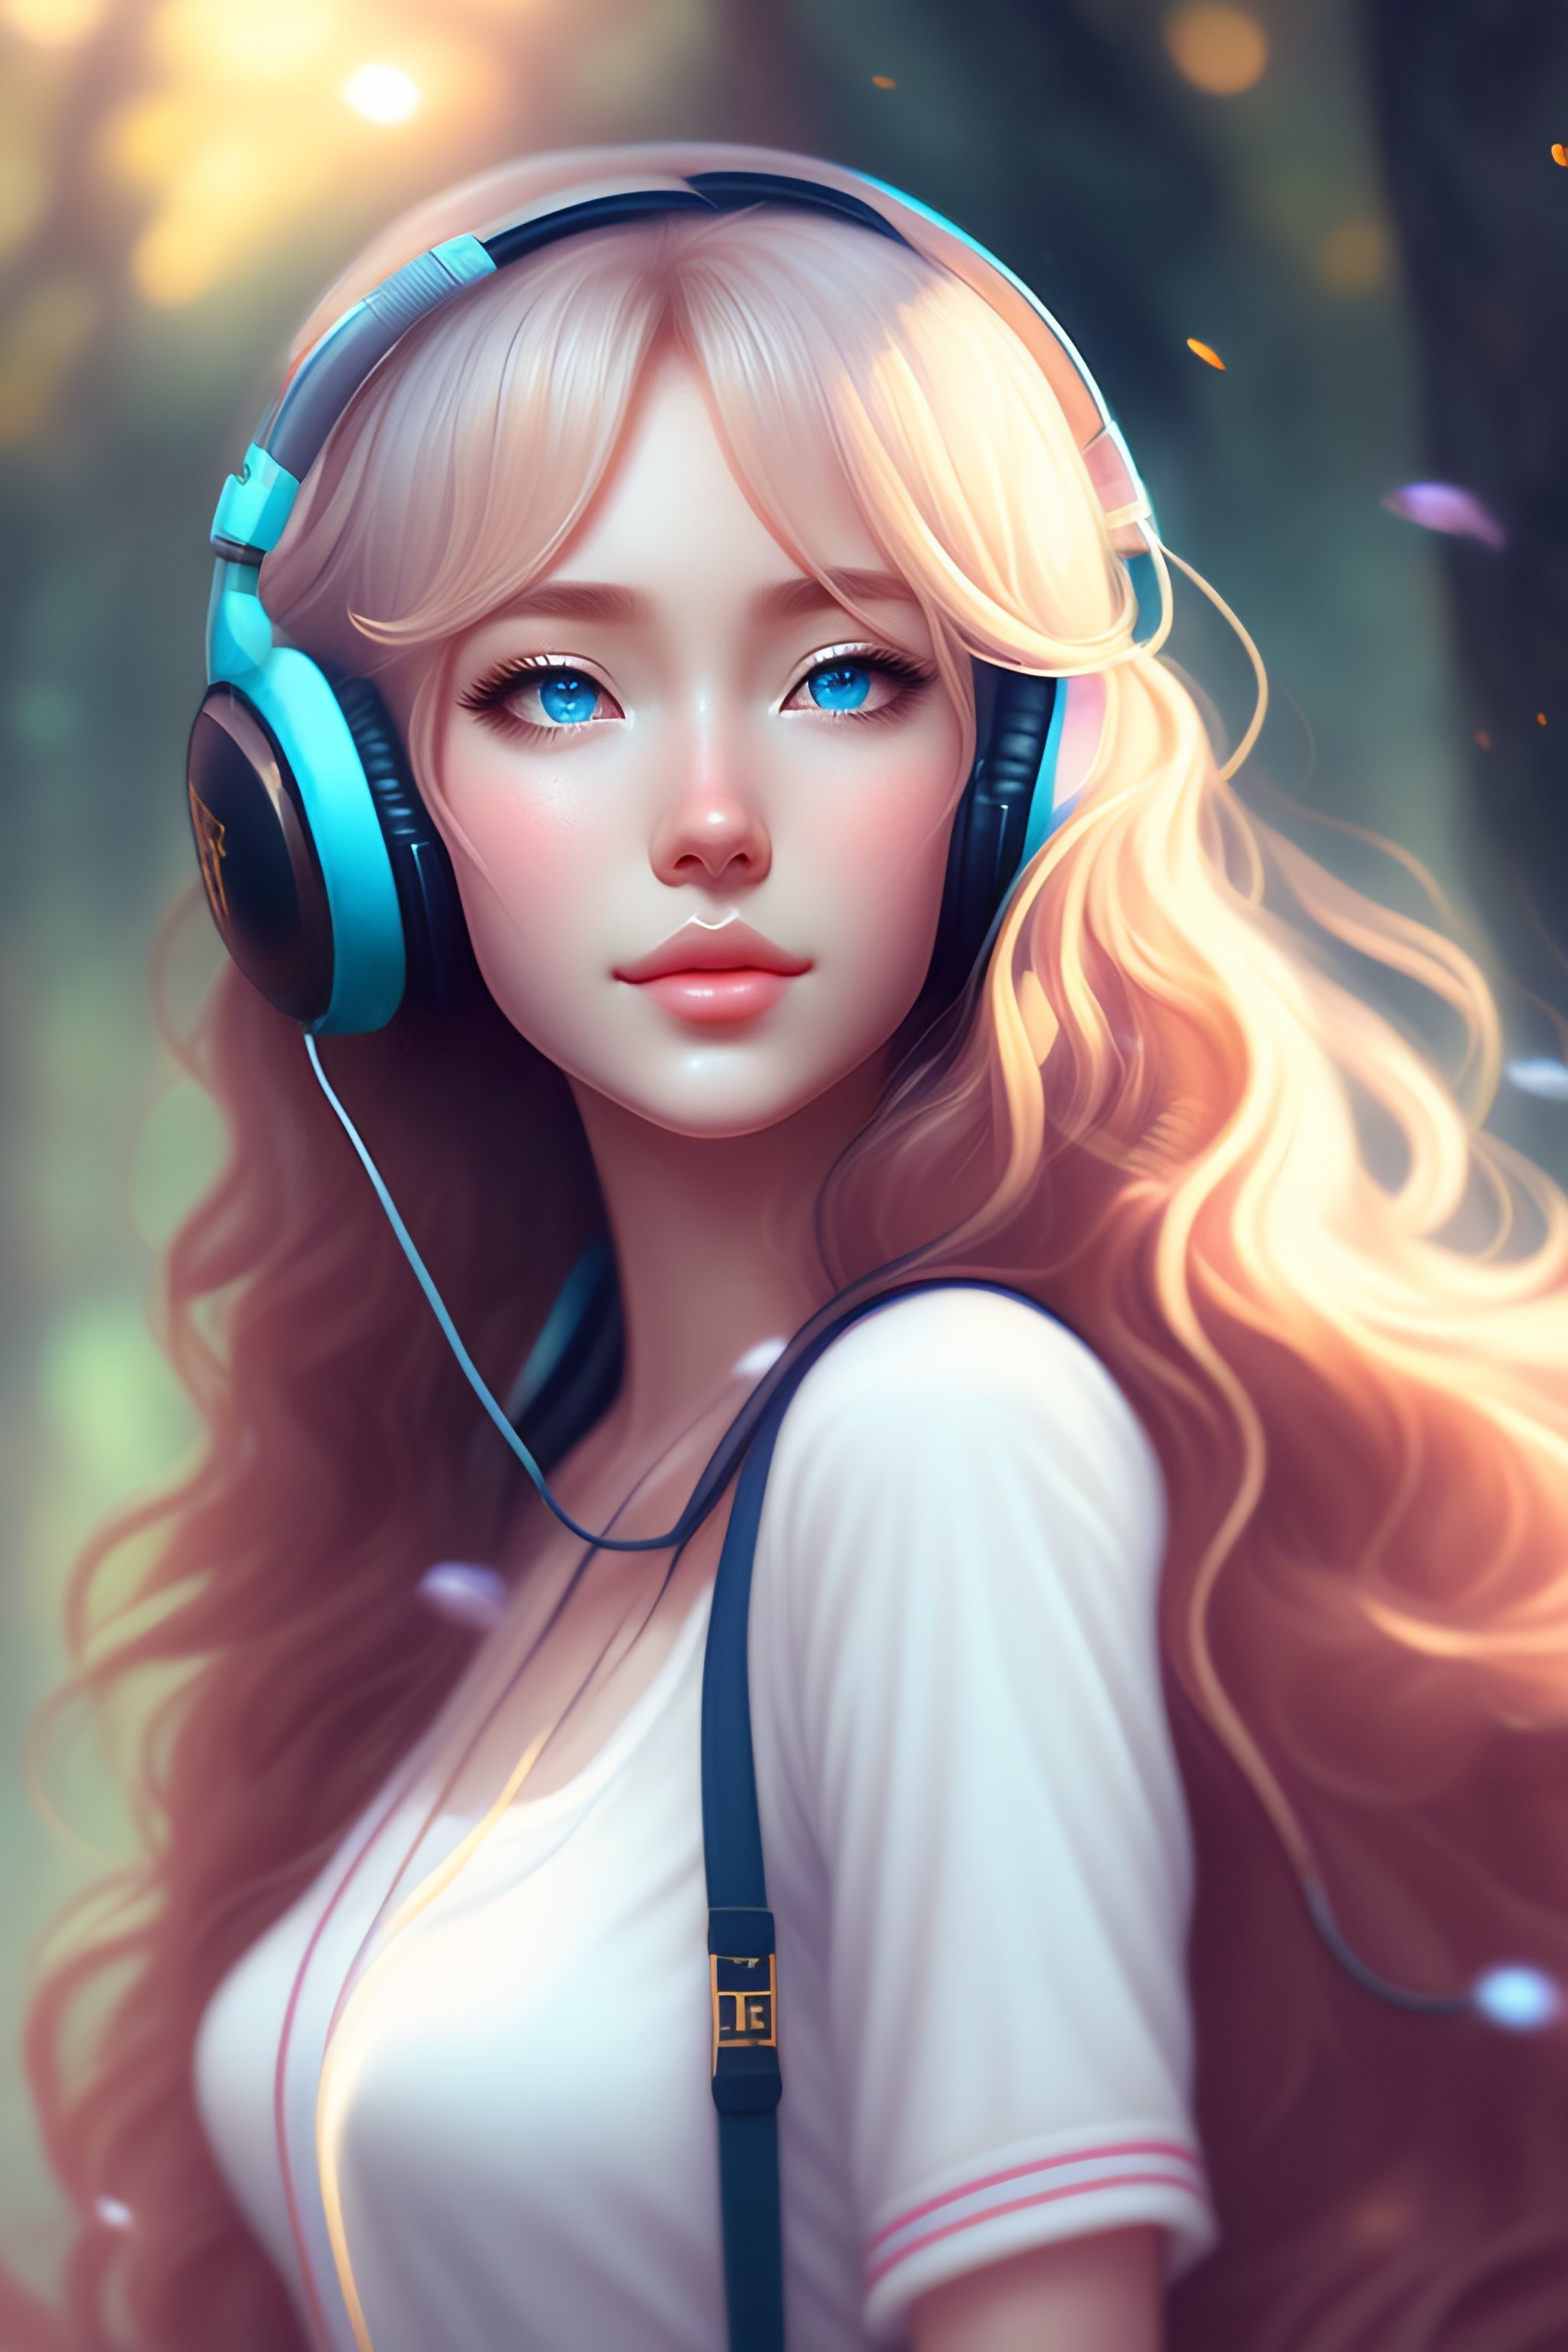 anime girl with headphones and blue hair